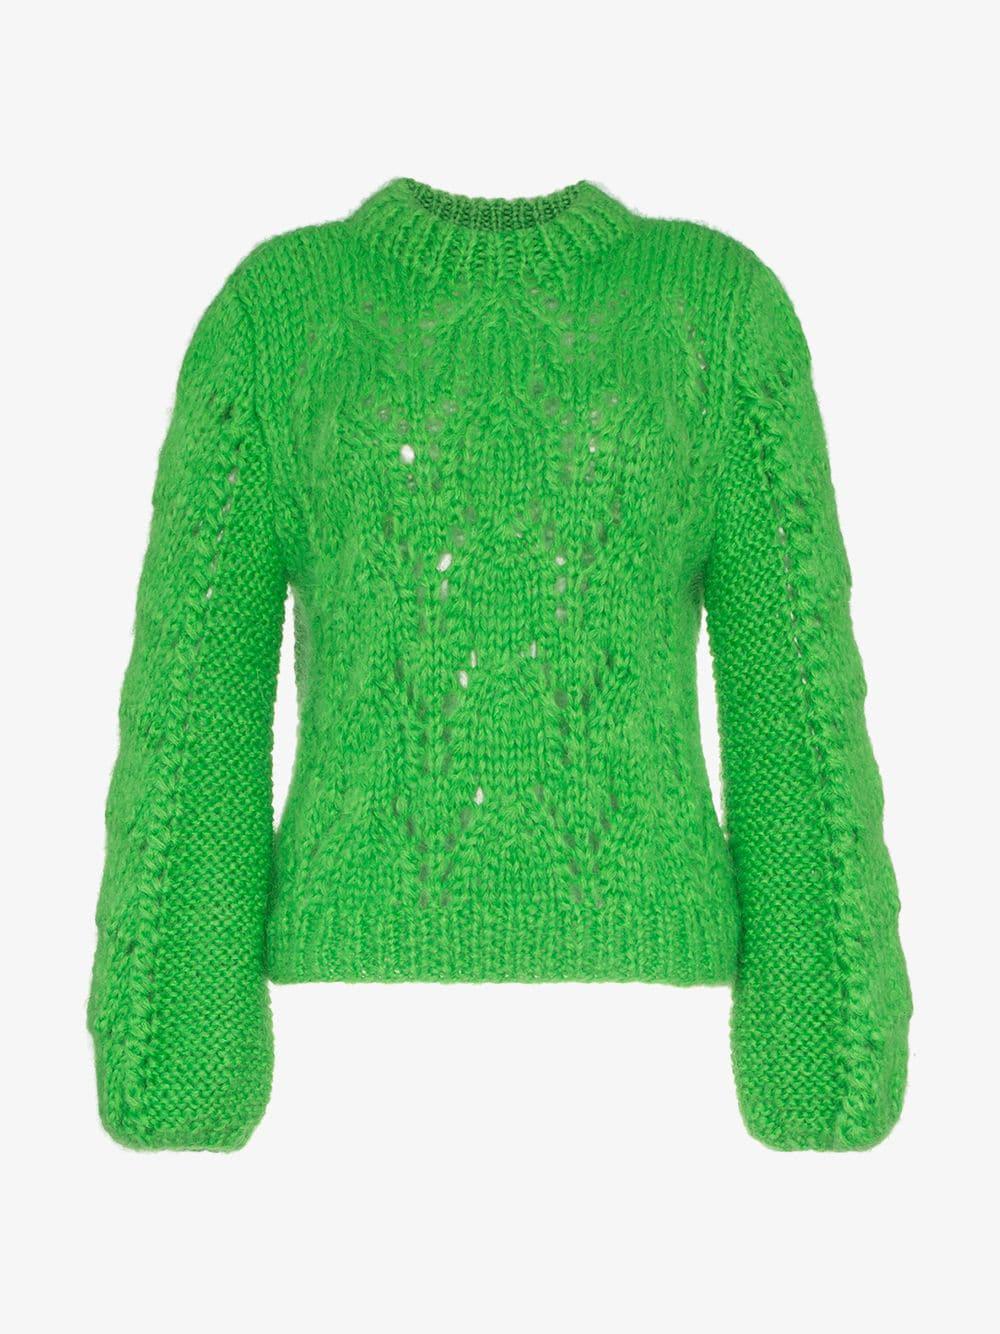 Ganni Julliard Mohair And Wool Sweater in Green - Lyst